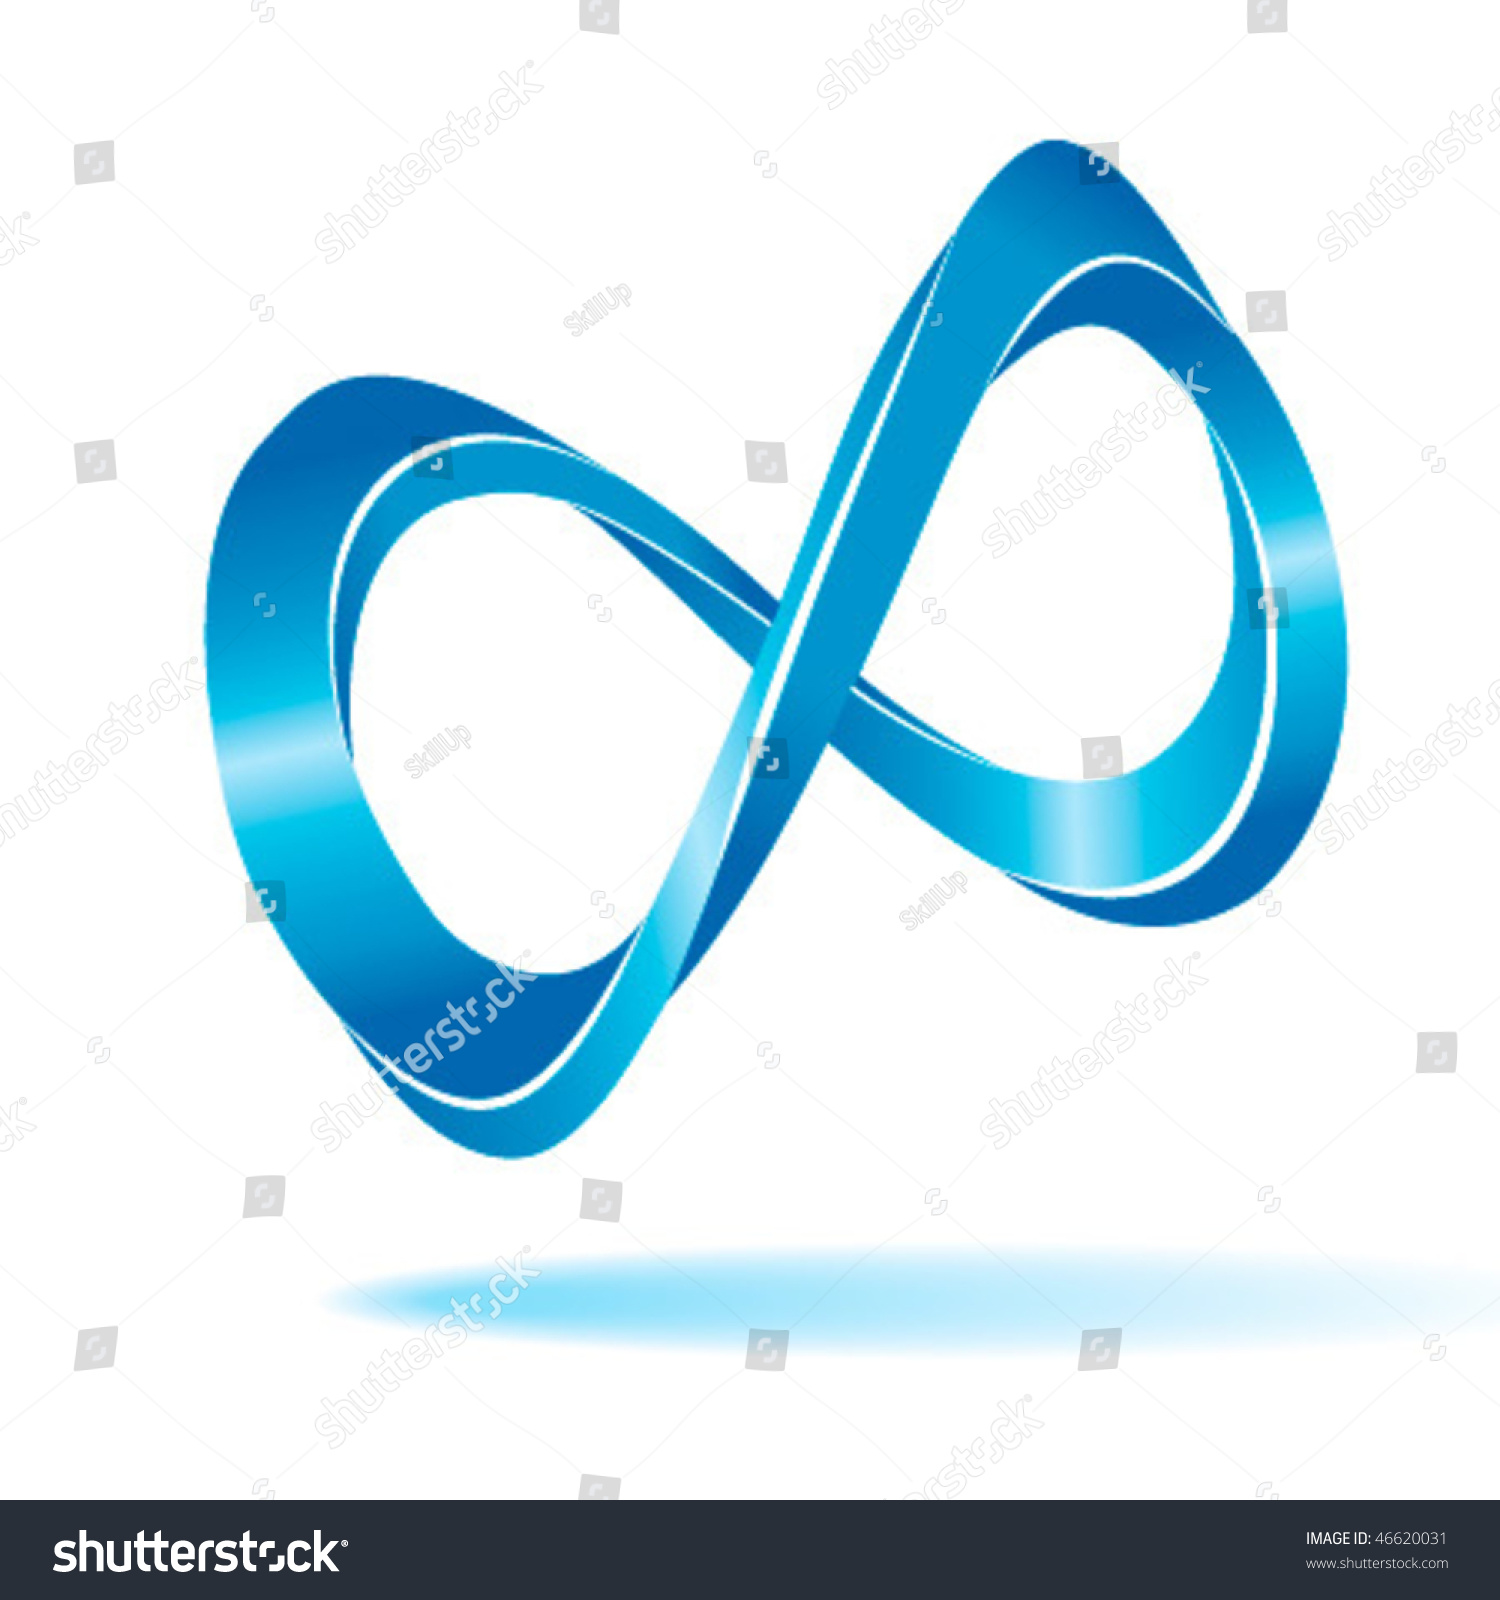 Infinity Symbol Vector Free Download